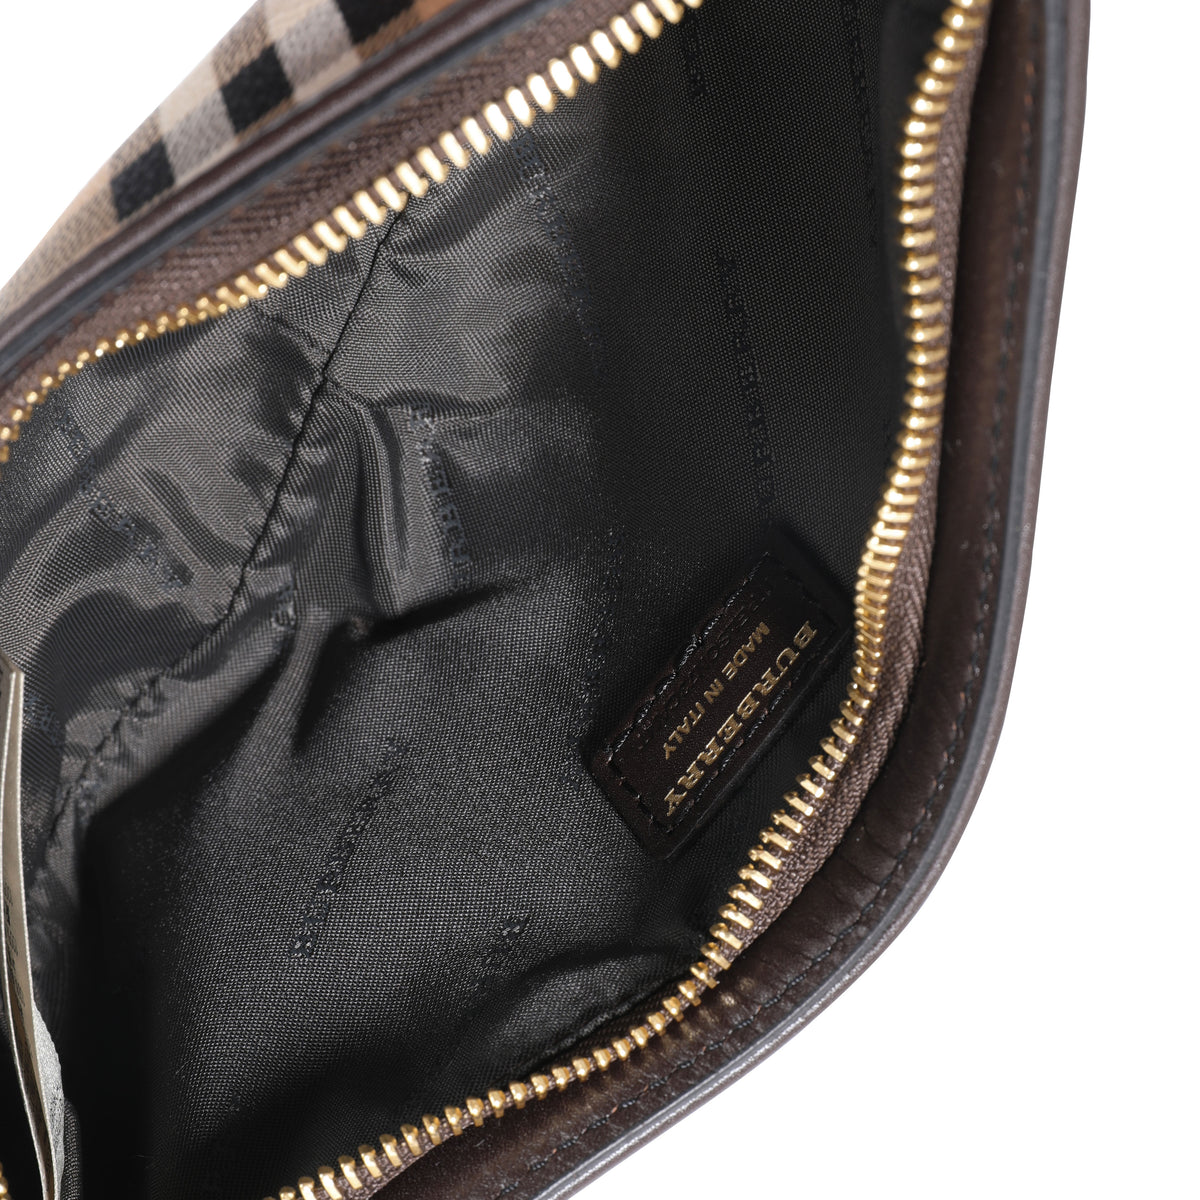 Burberry Haymarket Nova Check Clara Convertible Wristlet: Handbags